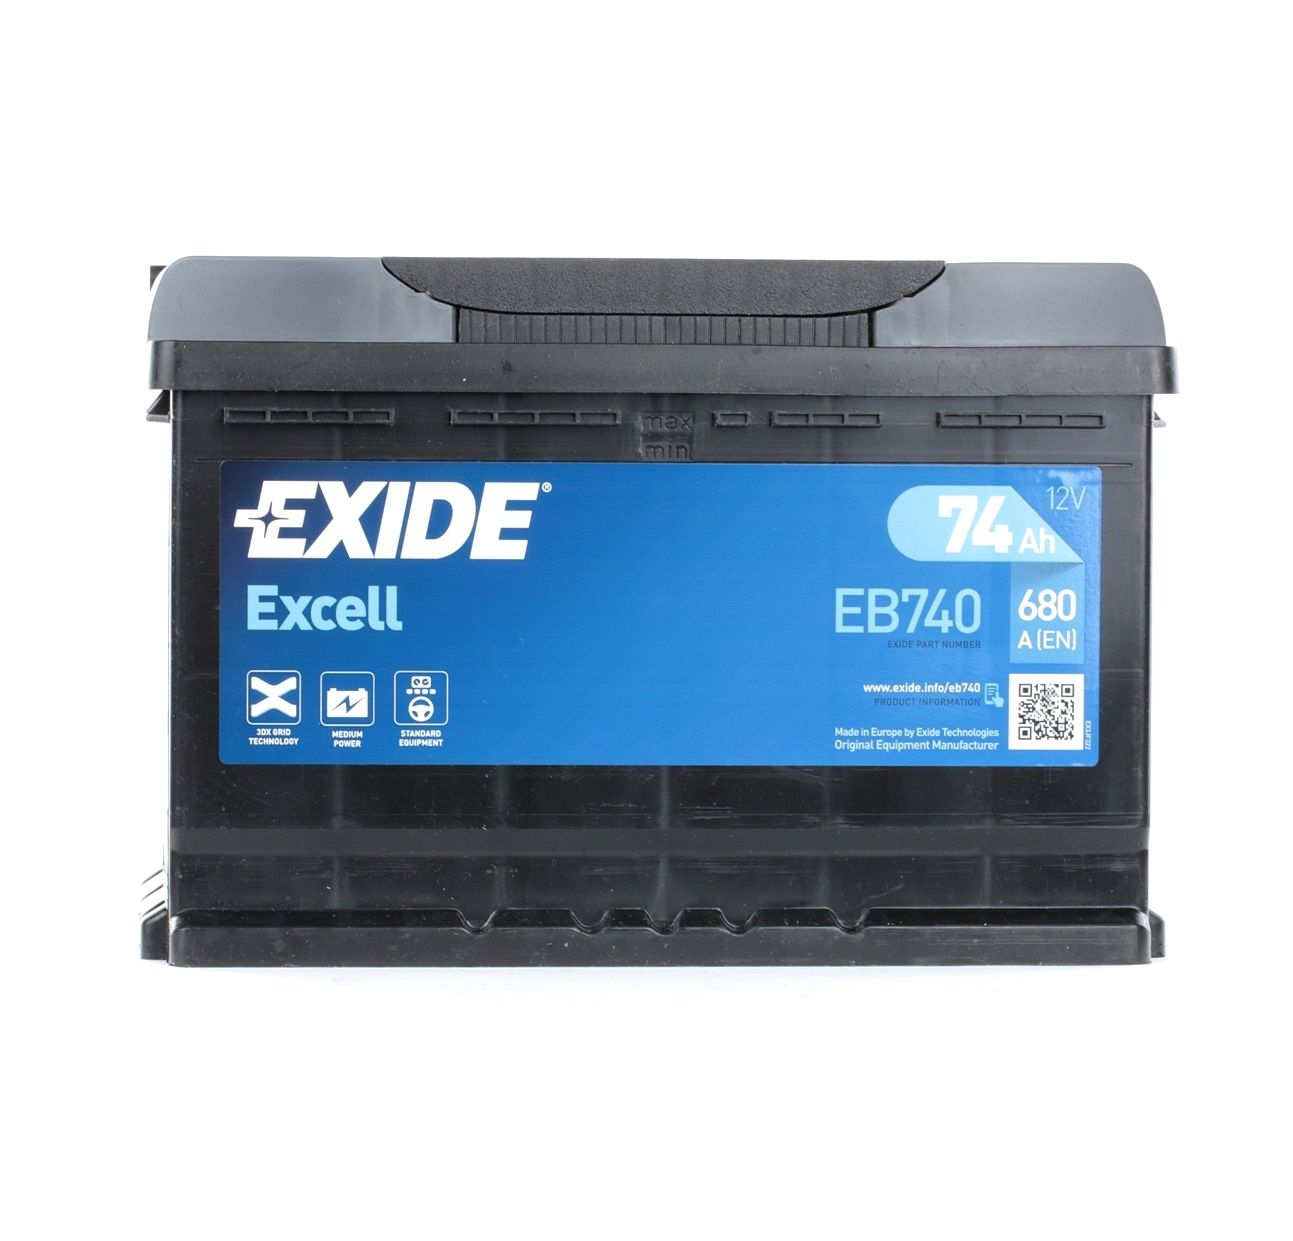 EXIDE EXCELL EB740 Batterie 12V 74Ah 680A B13 Bleiakkumulator